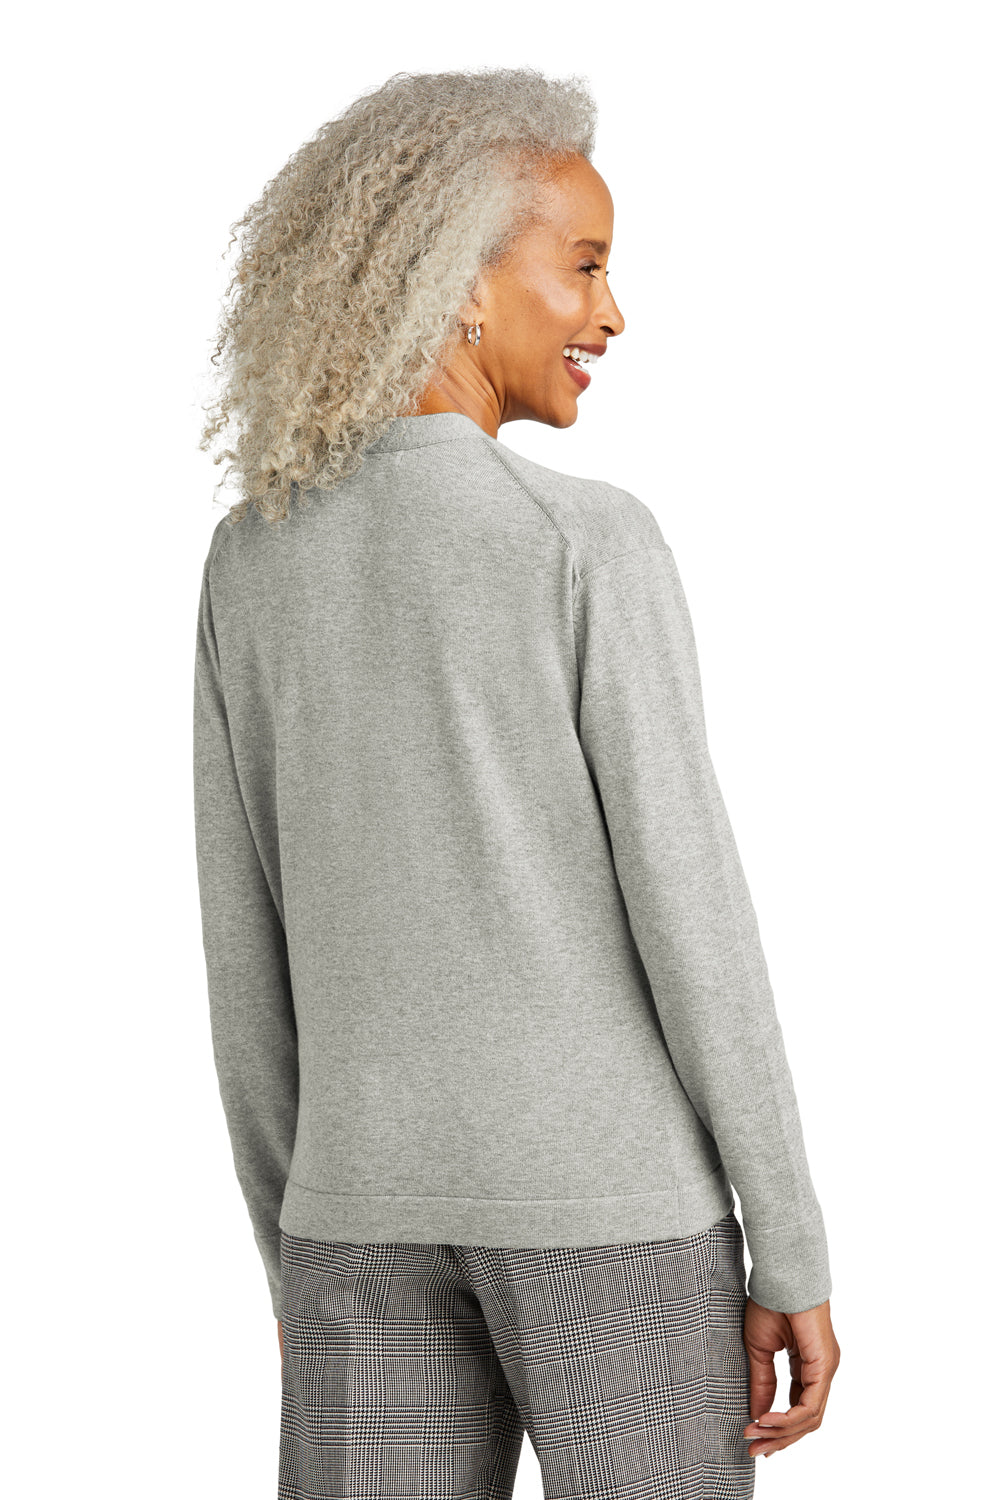 Brooks Brothers Womens Long Sleeeve Cardigan Sweater Heather Light Shadow Grey Model Back